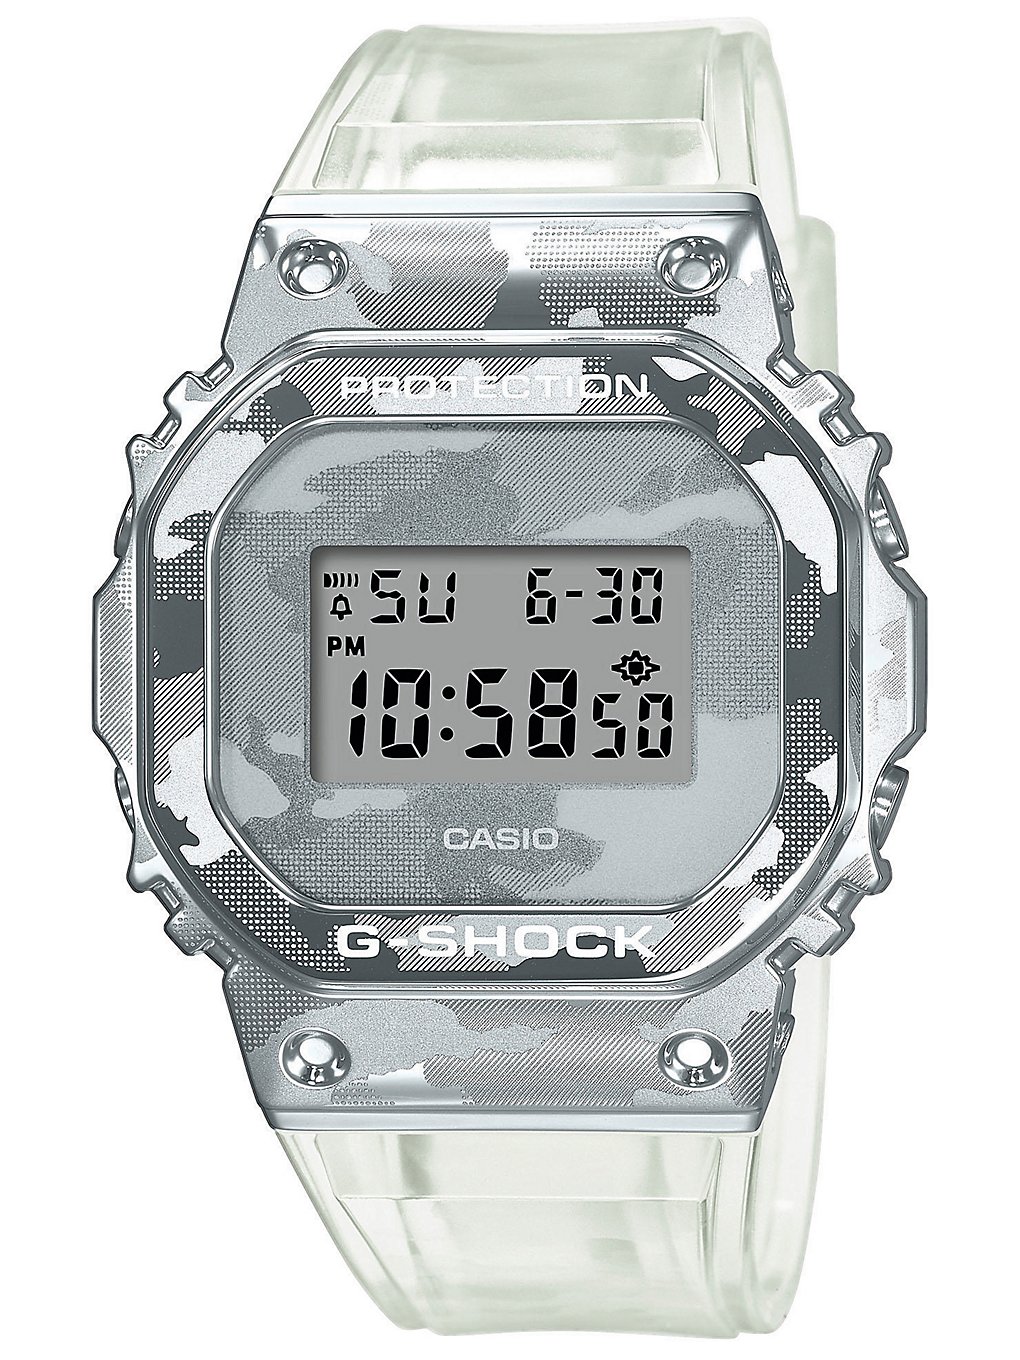 G-SHOCK GM-5600SCM-1ER Watch camouflage